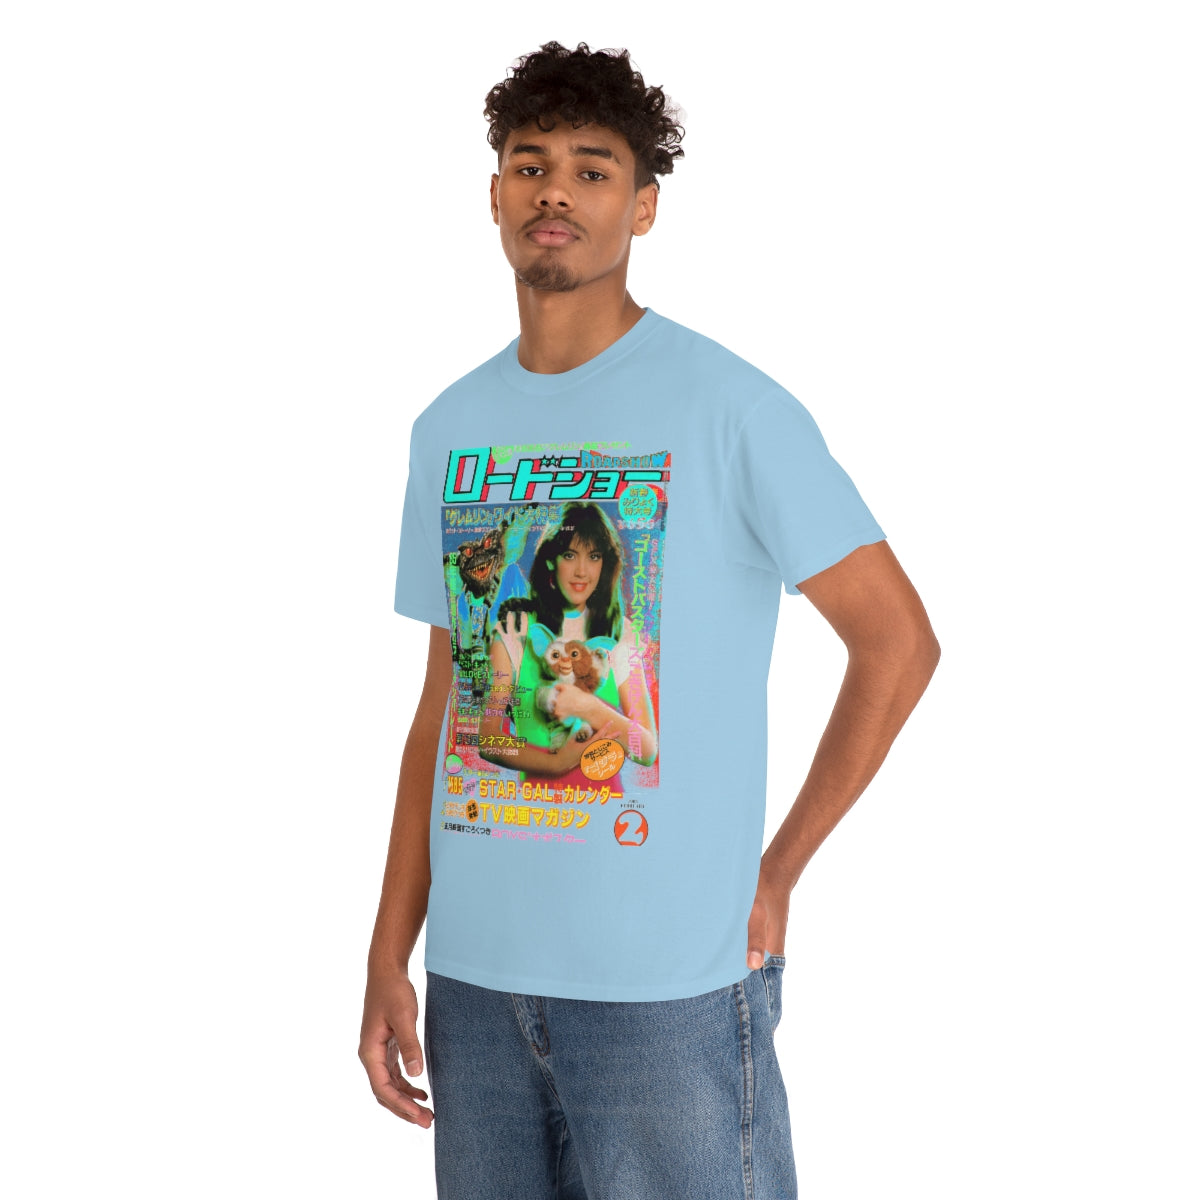 Gremlins Star Gal Shirt